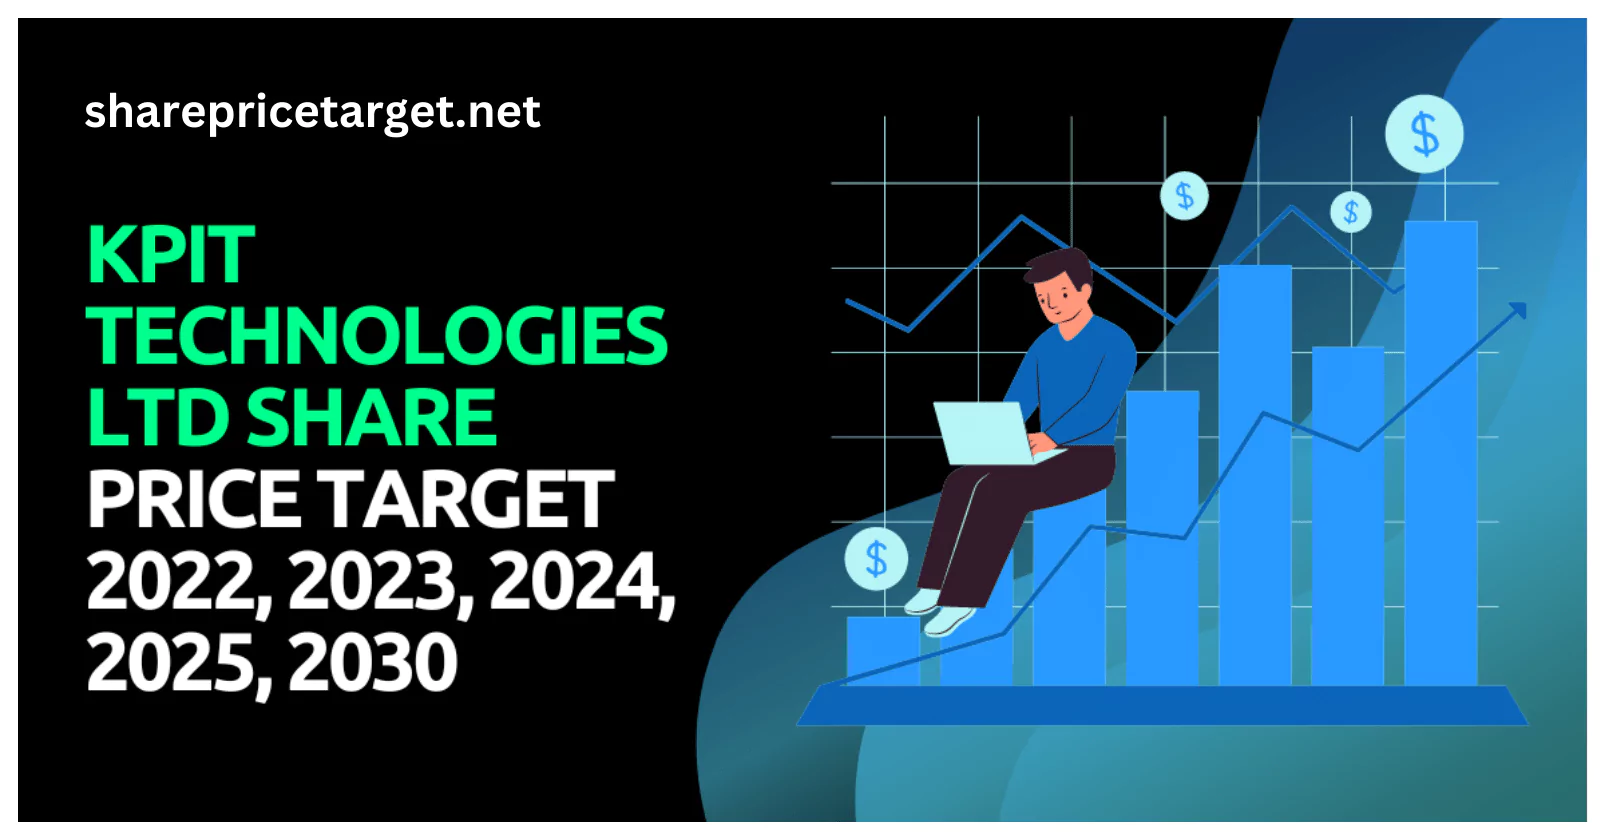 KPIT Share Price Target 2030